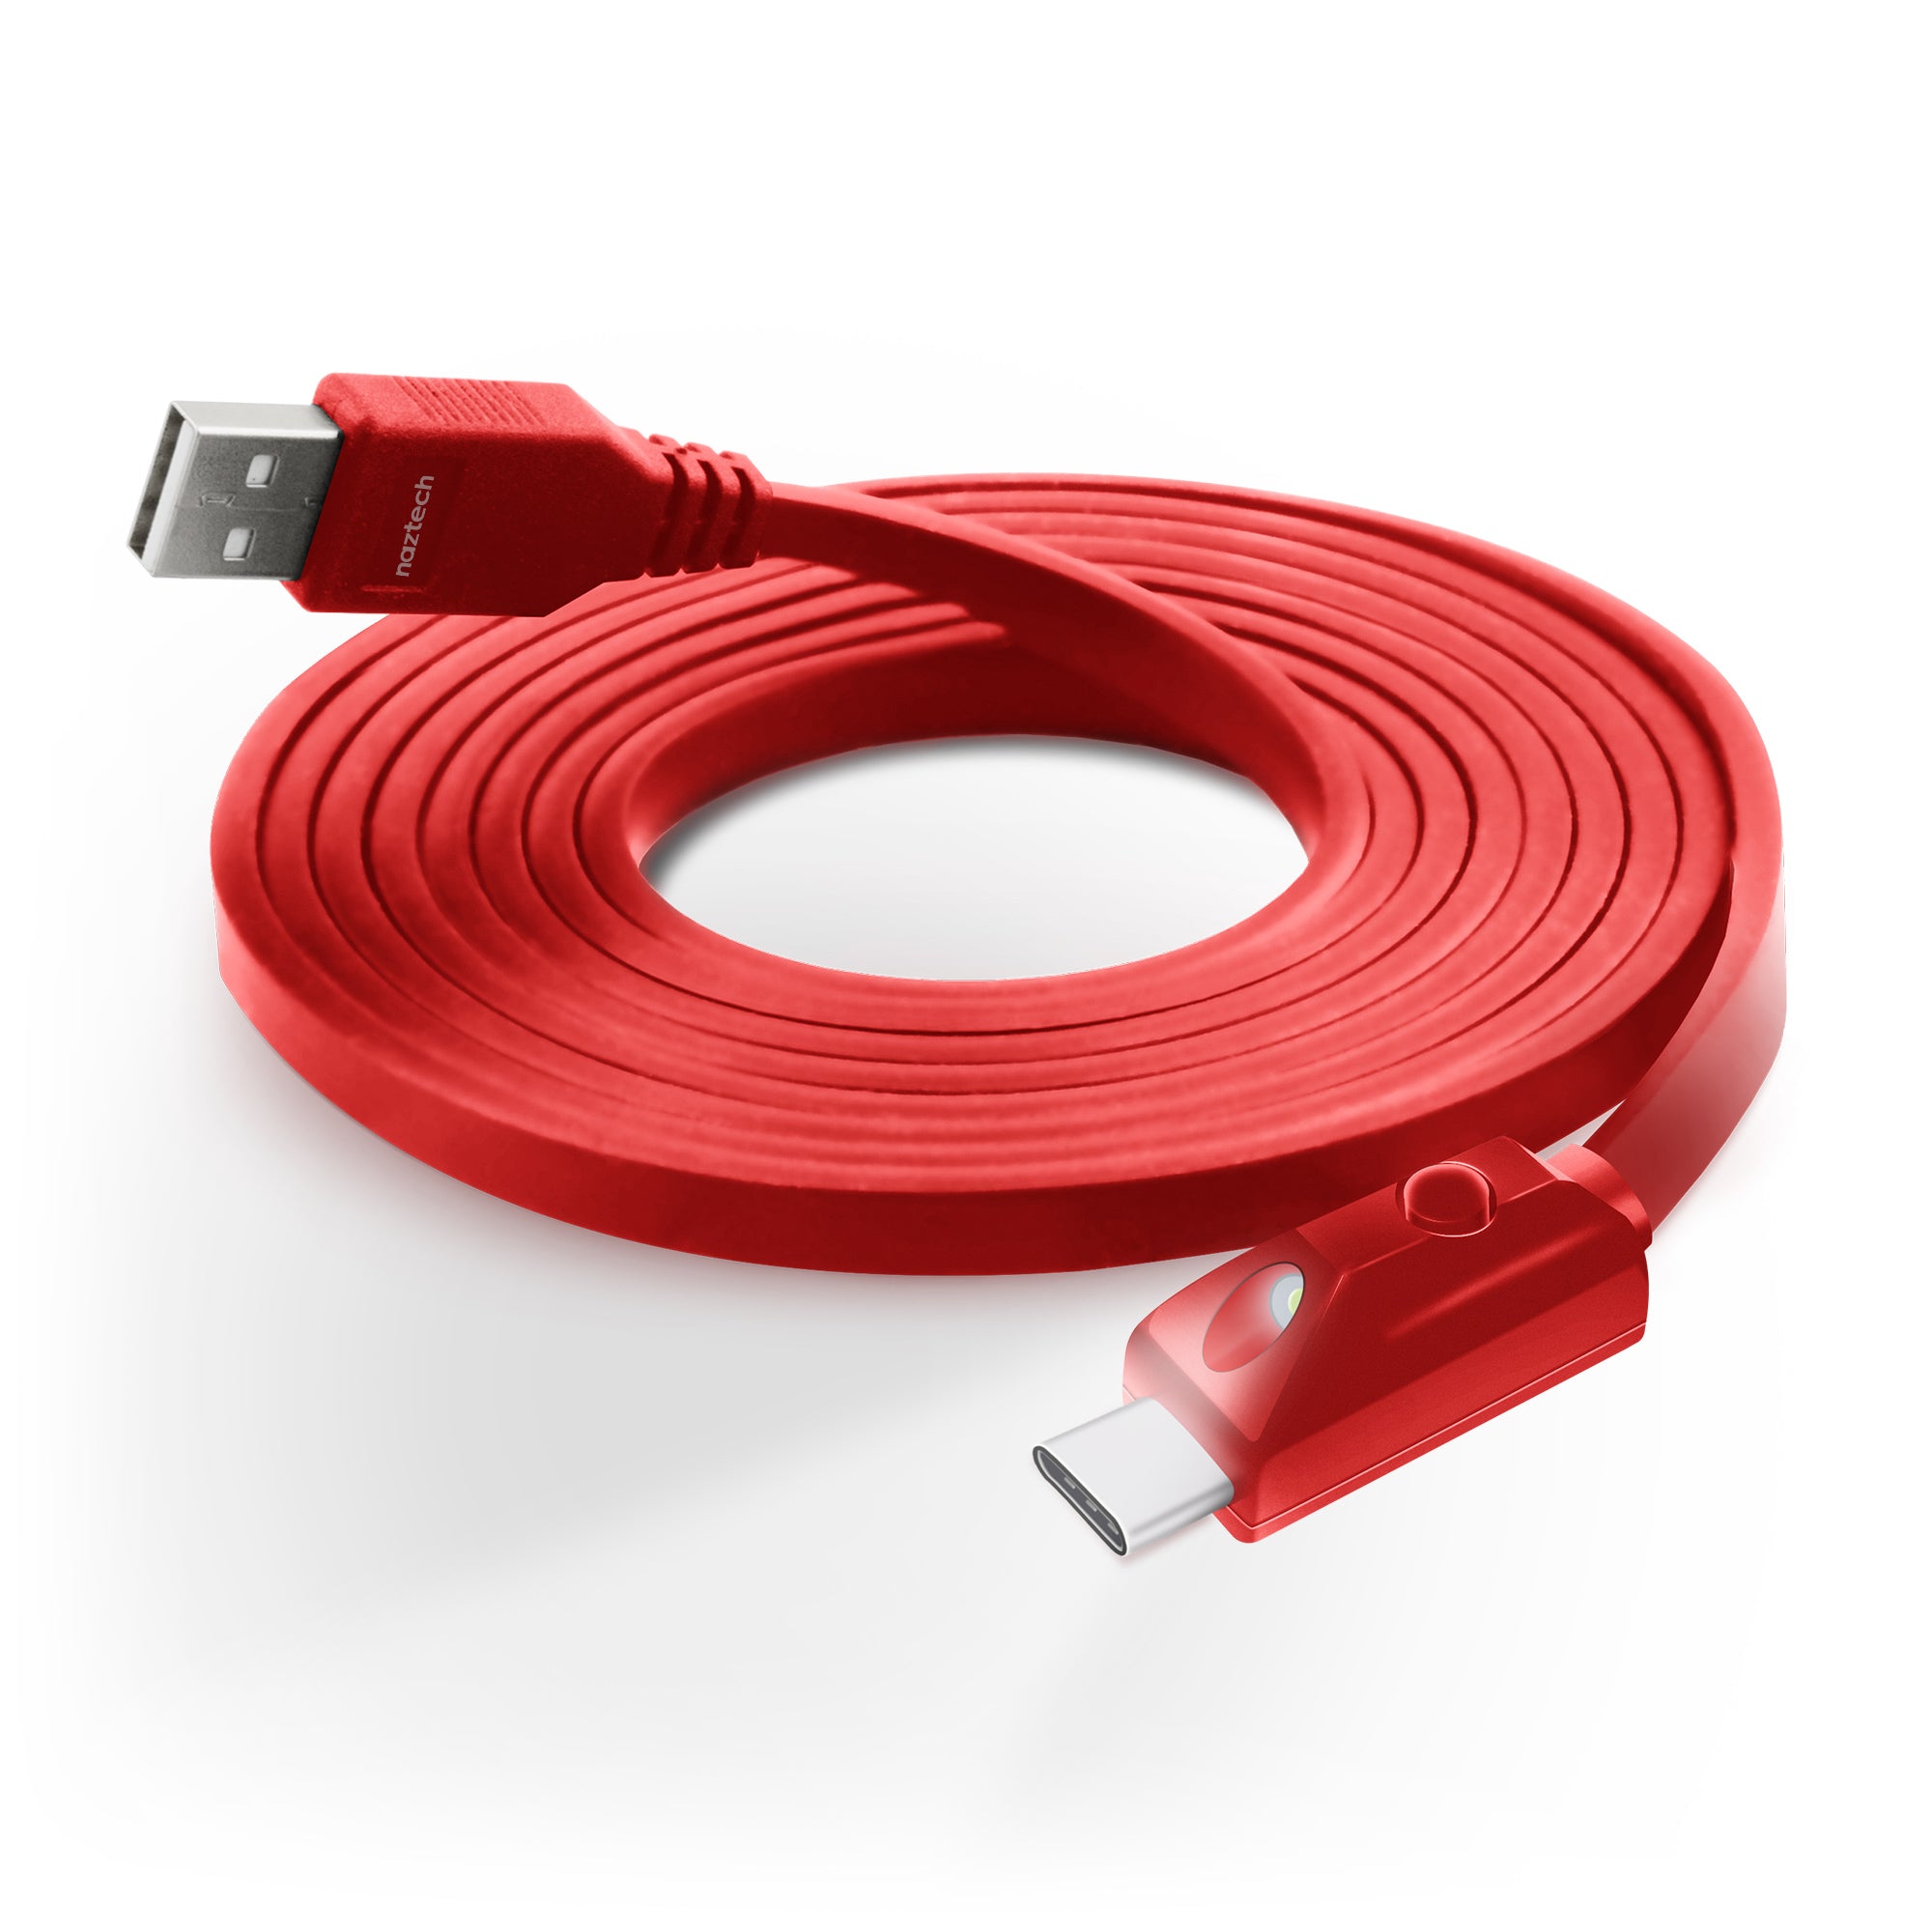 USB-C to Lightning Cable - Flat 6ft BLACK